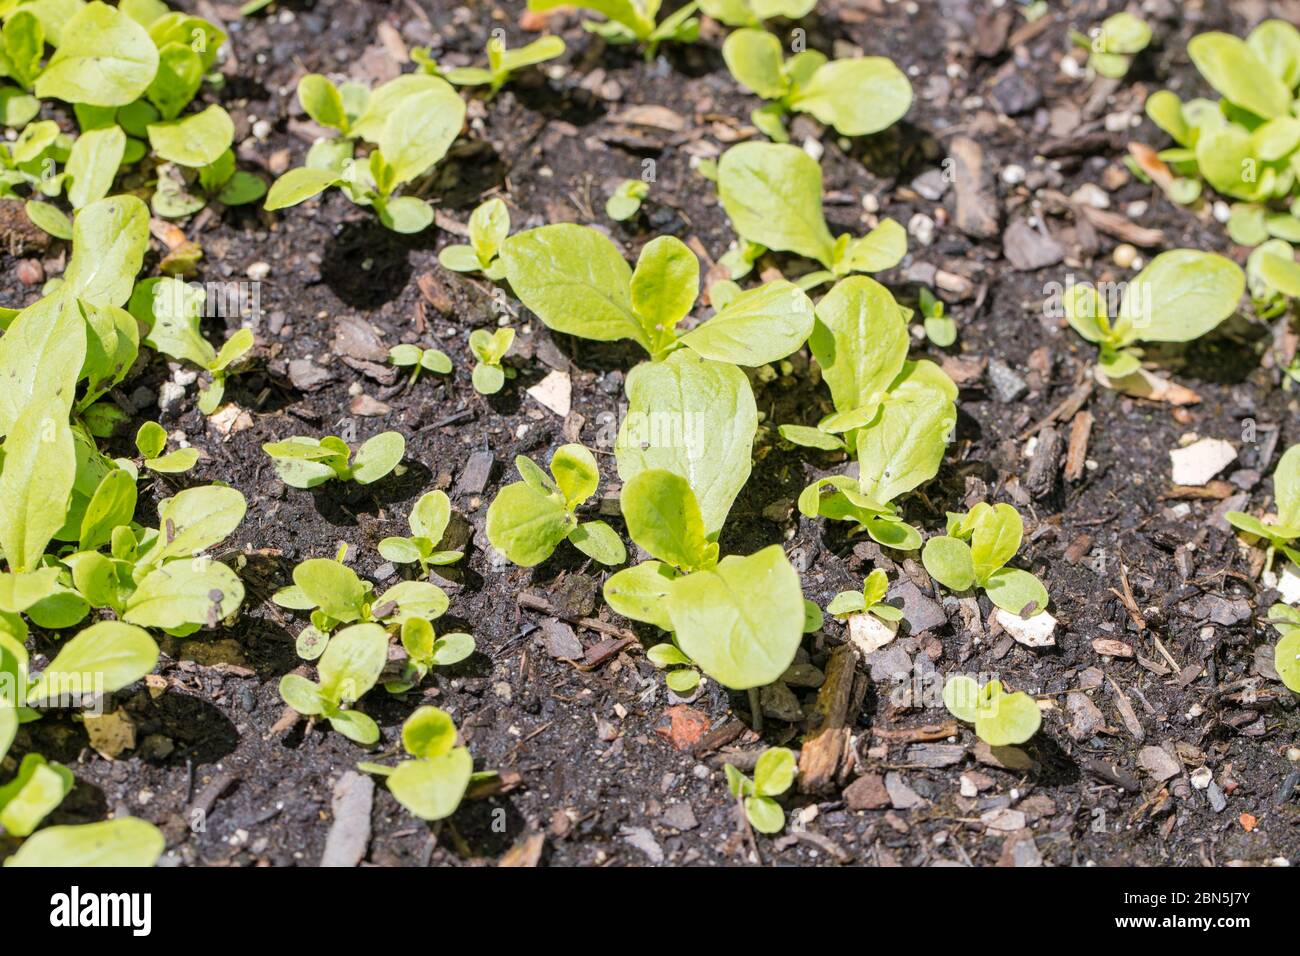 Fresh white Radish leaves organic growing field plant - Image Stock Photo